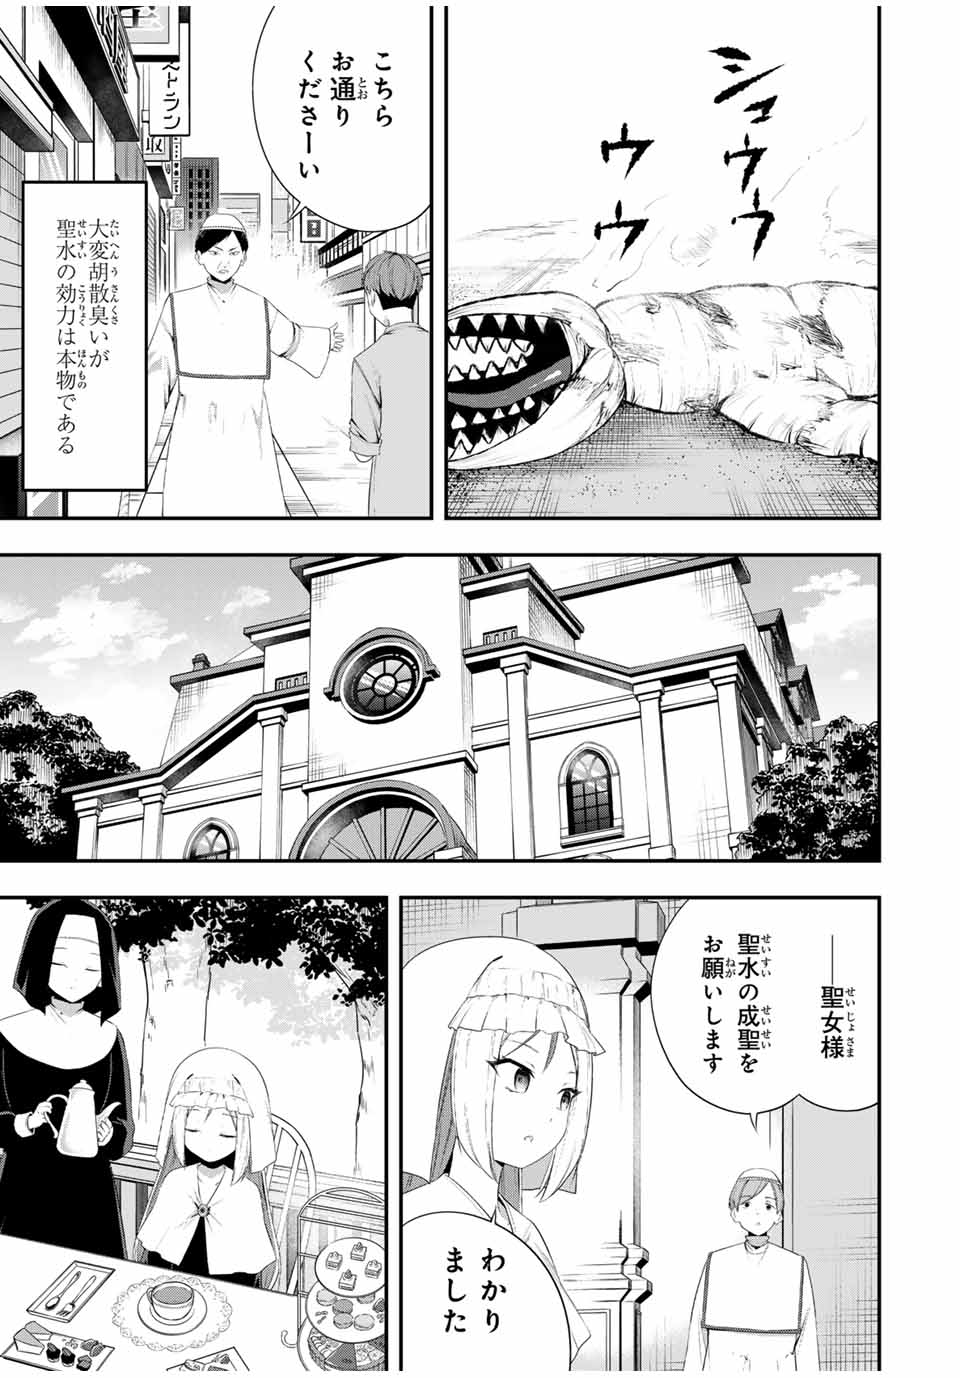 Heroine wa xx Okasegitai - Chapter 15 - Page 14